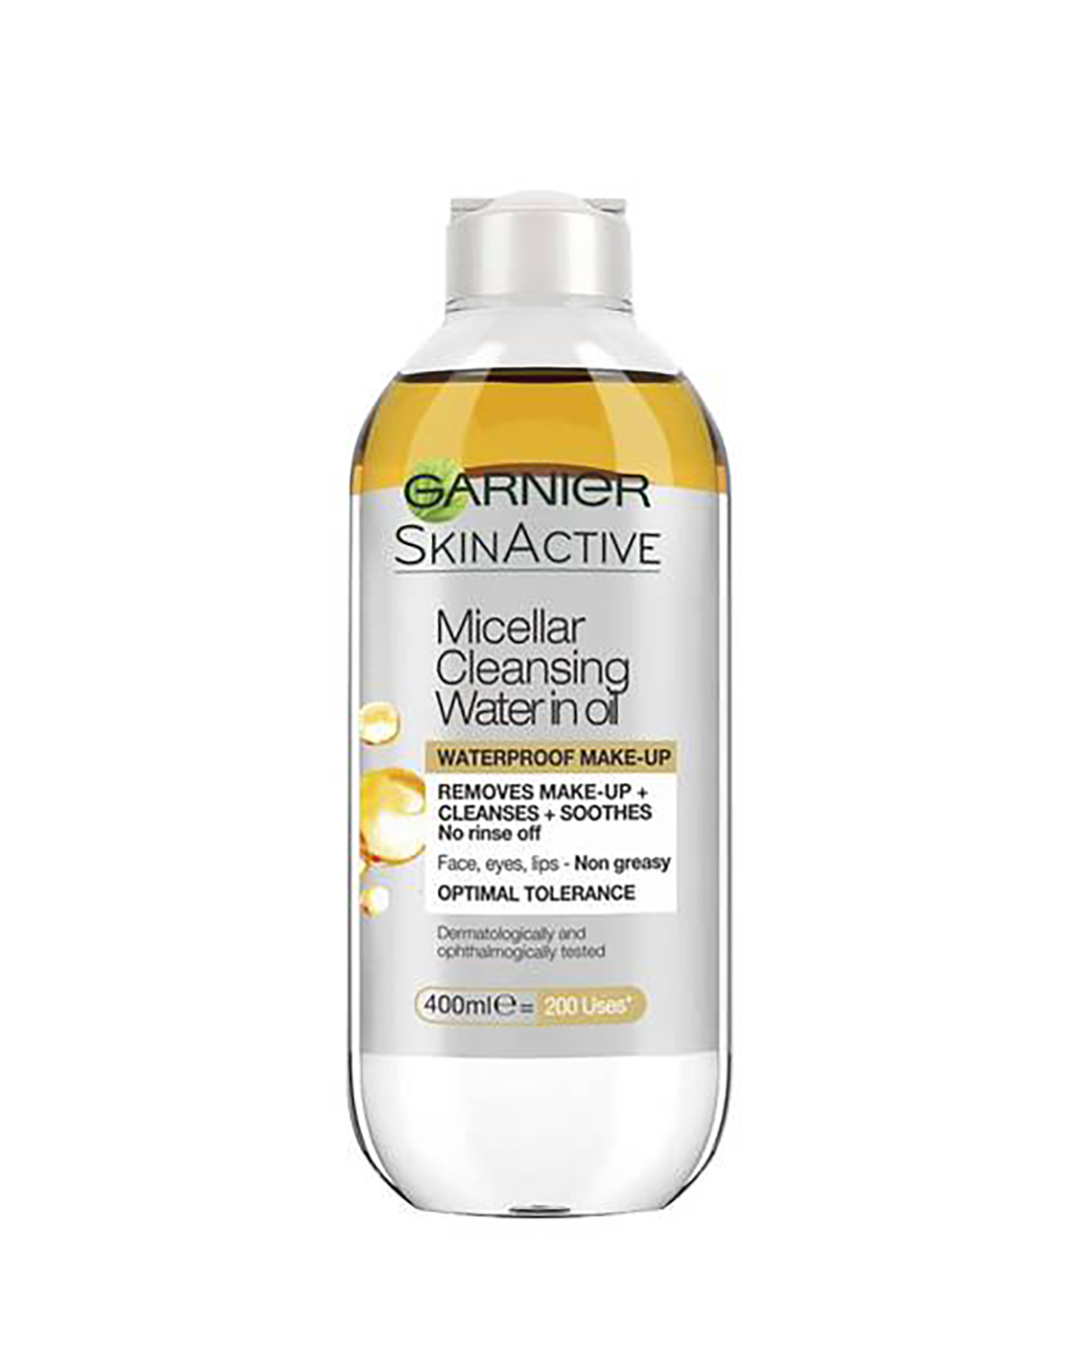 Garnier Skin Active Micellar Cleansing Water in Oil